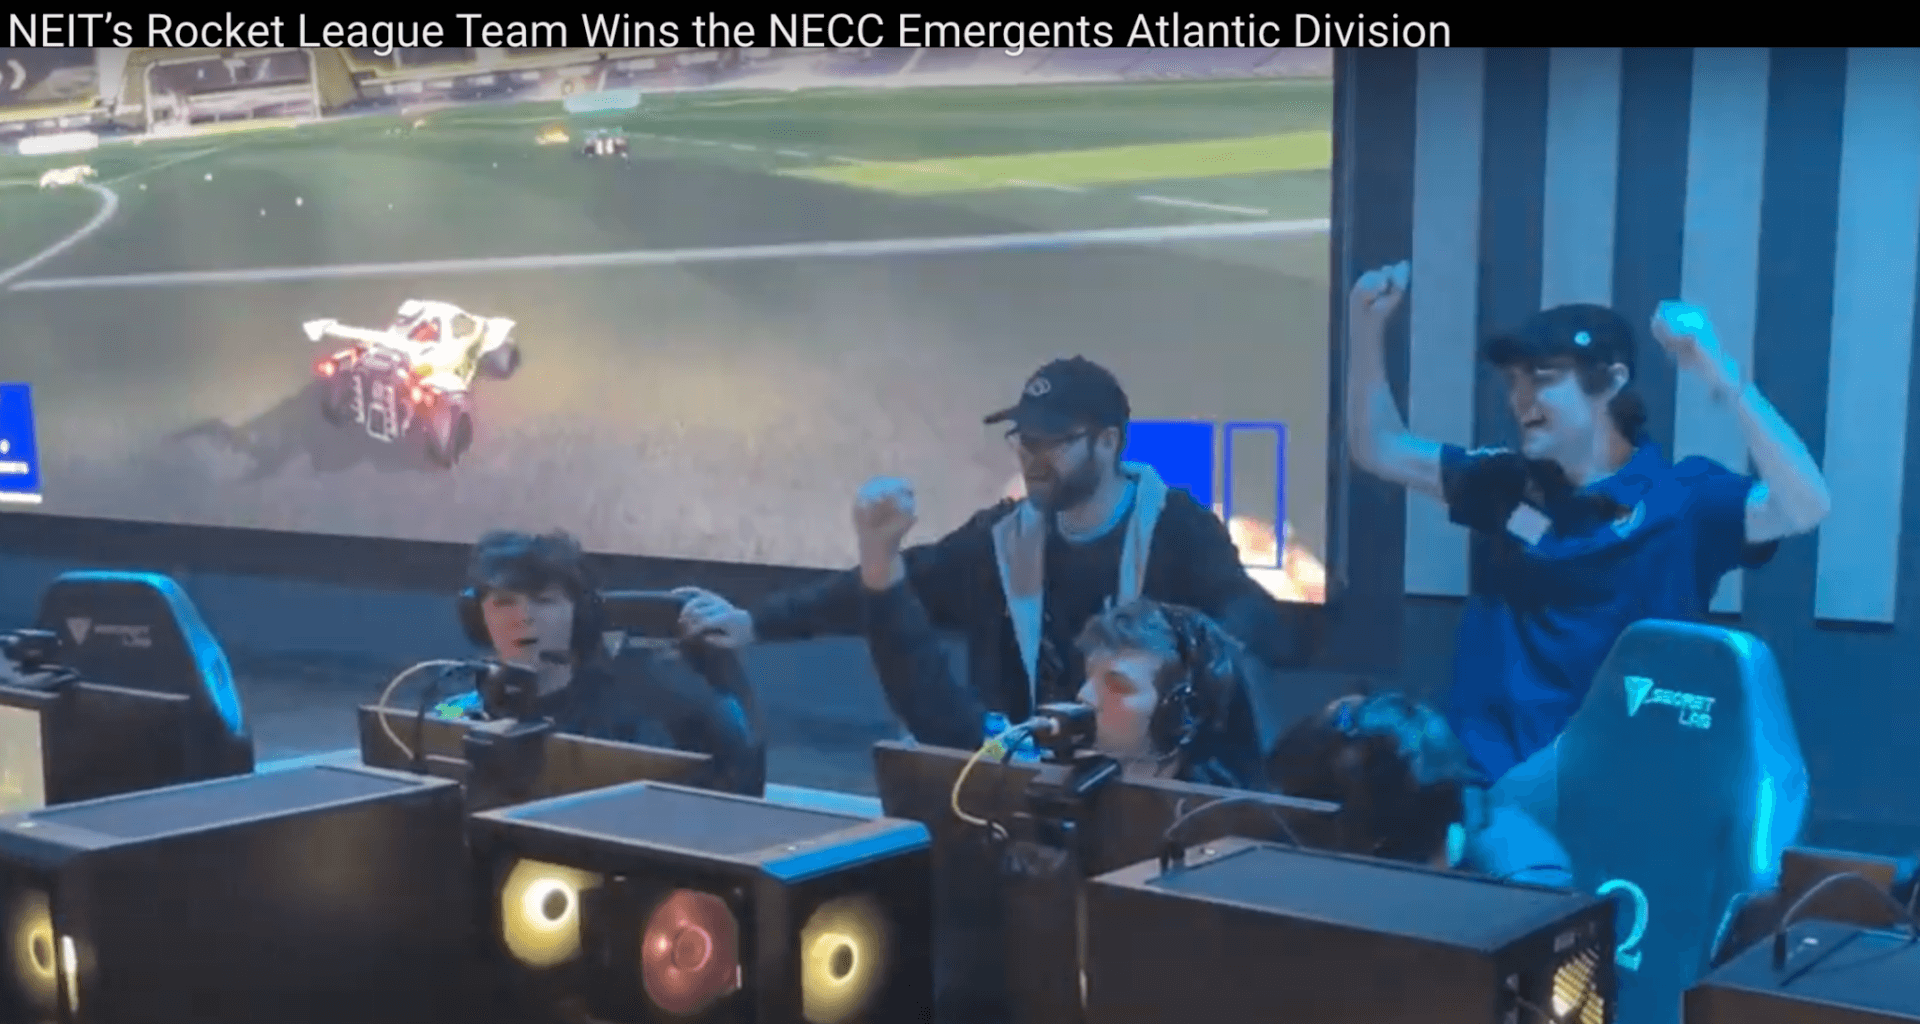 [CREDIT: NEIT] The NEIT esports team won the NECC Rocket League Title in the Emergents Atlantic Division Dec. 4.